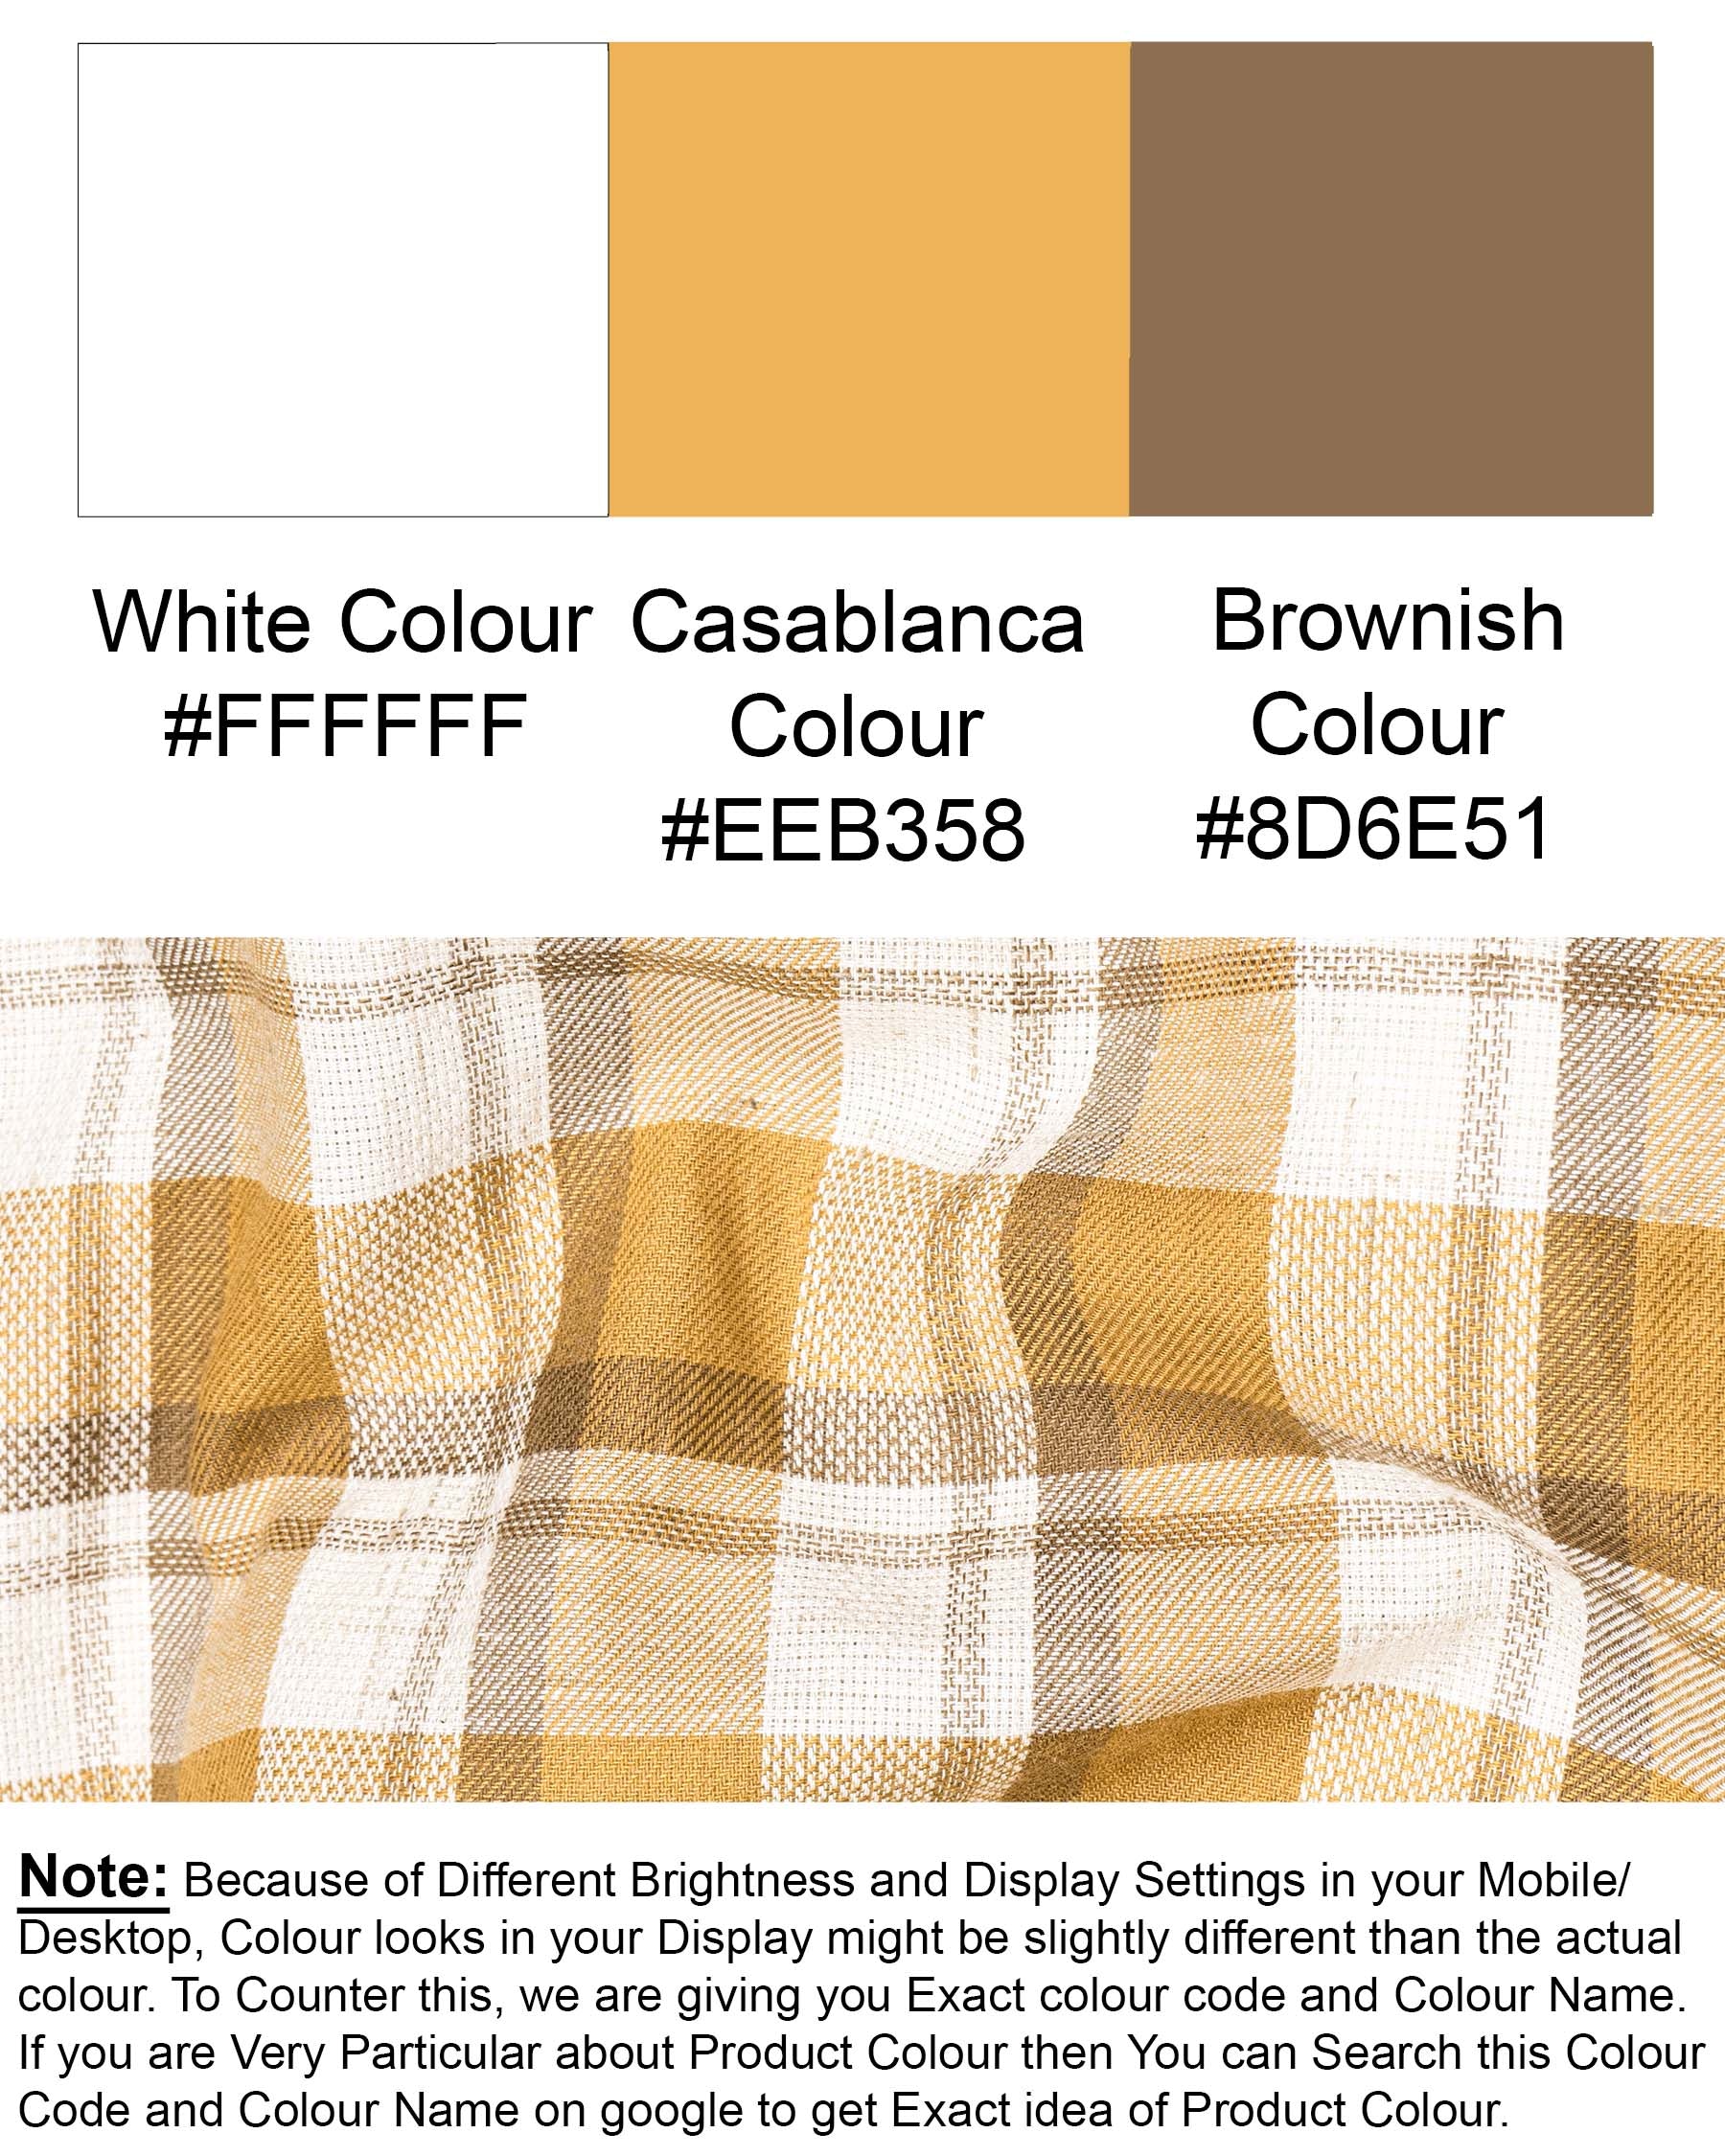 Casablanca Brown with Bright White Plaid Dobby Textured Premium Giza Cotton Shirt 7003-BD-38,7003-BD-38,7003-BD-39,7003-BD-39,7003-BD-40,7003-BD-40,7003-BD-42,7003-BD-42,7003-BD-44,7003-BD-44,7003-BD-46,7003-BD-46,7003-BD-48,7003-BD-48,7003-BD-50,7003-BD-50,7003-BD-52,7003-BD-52